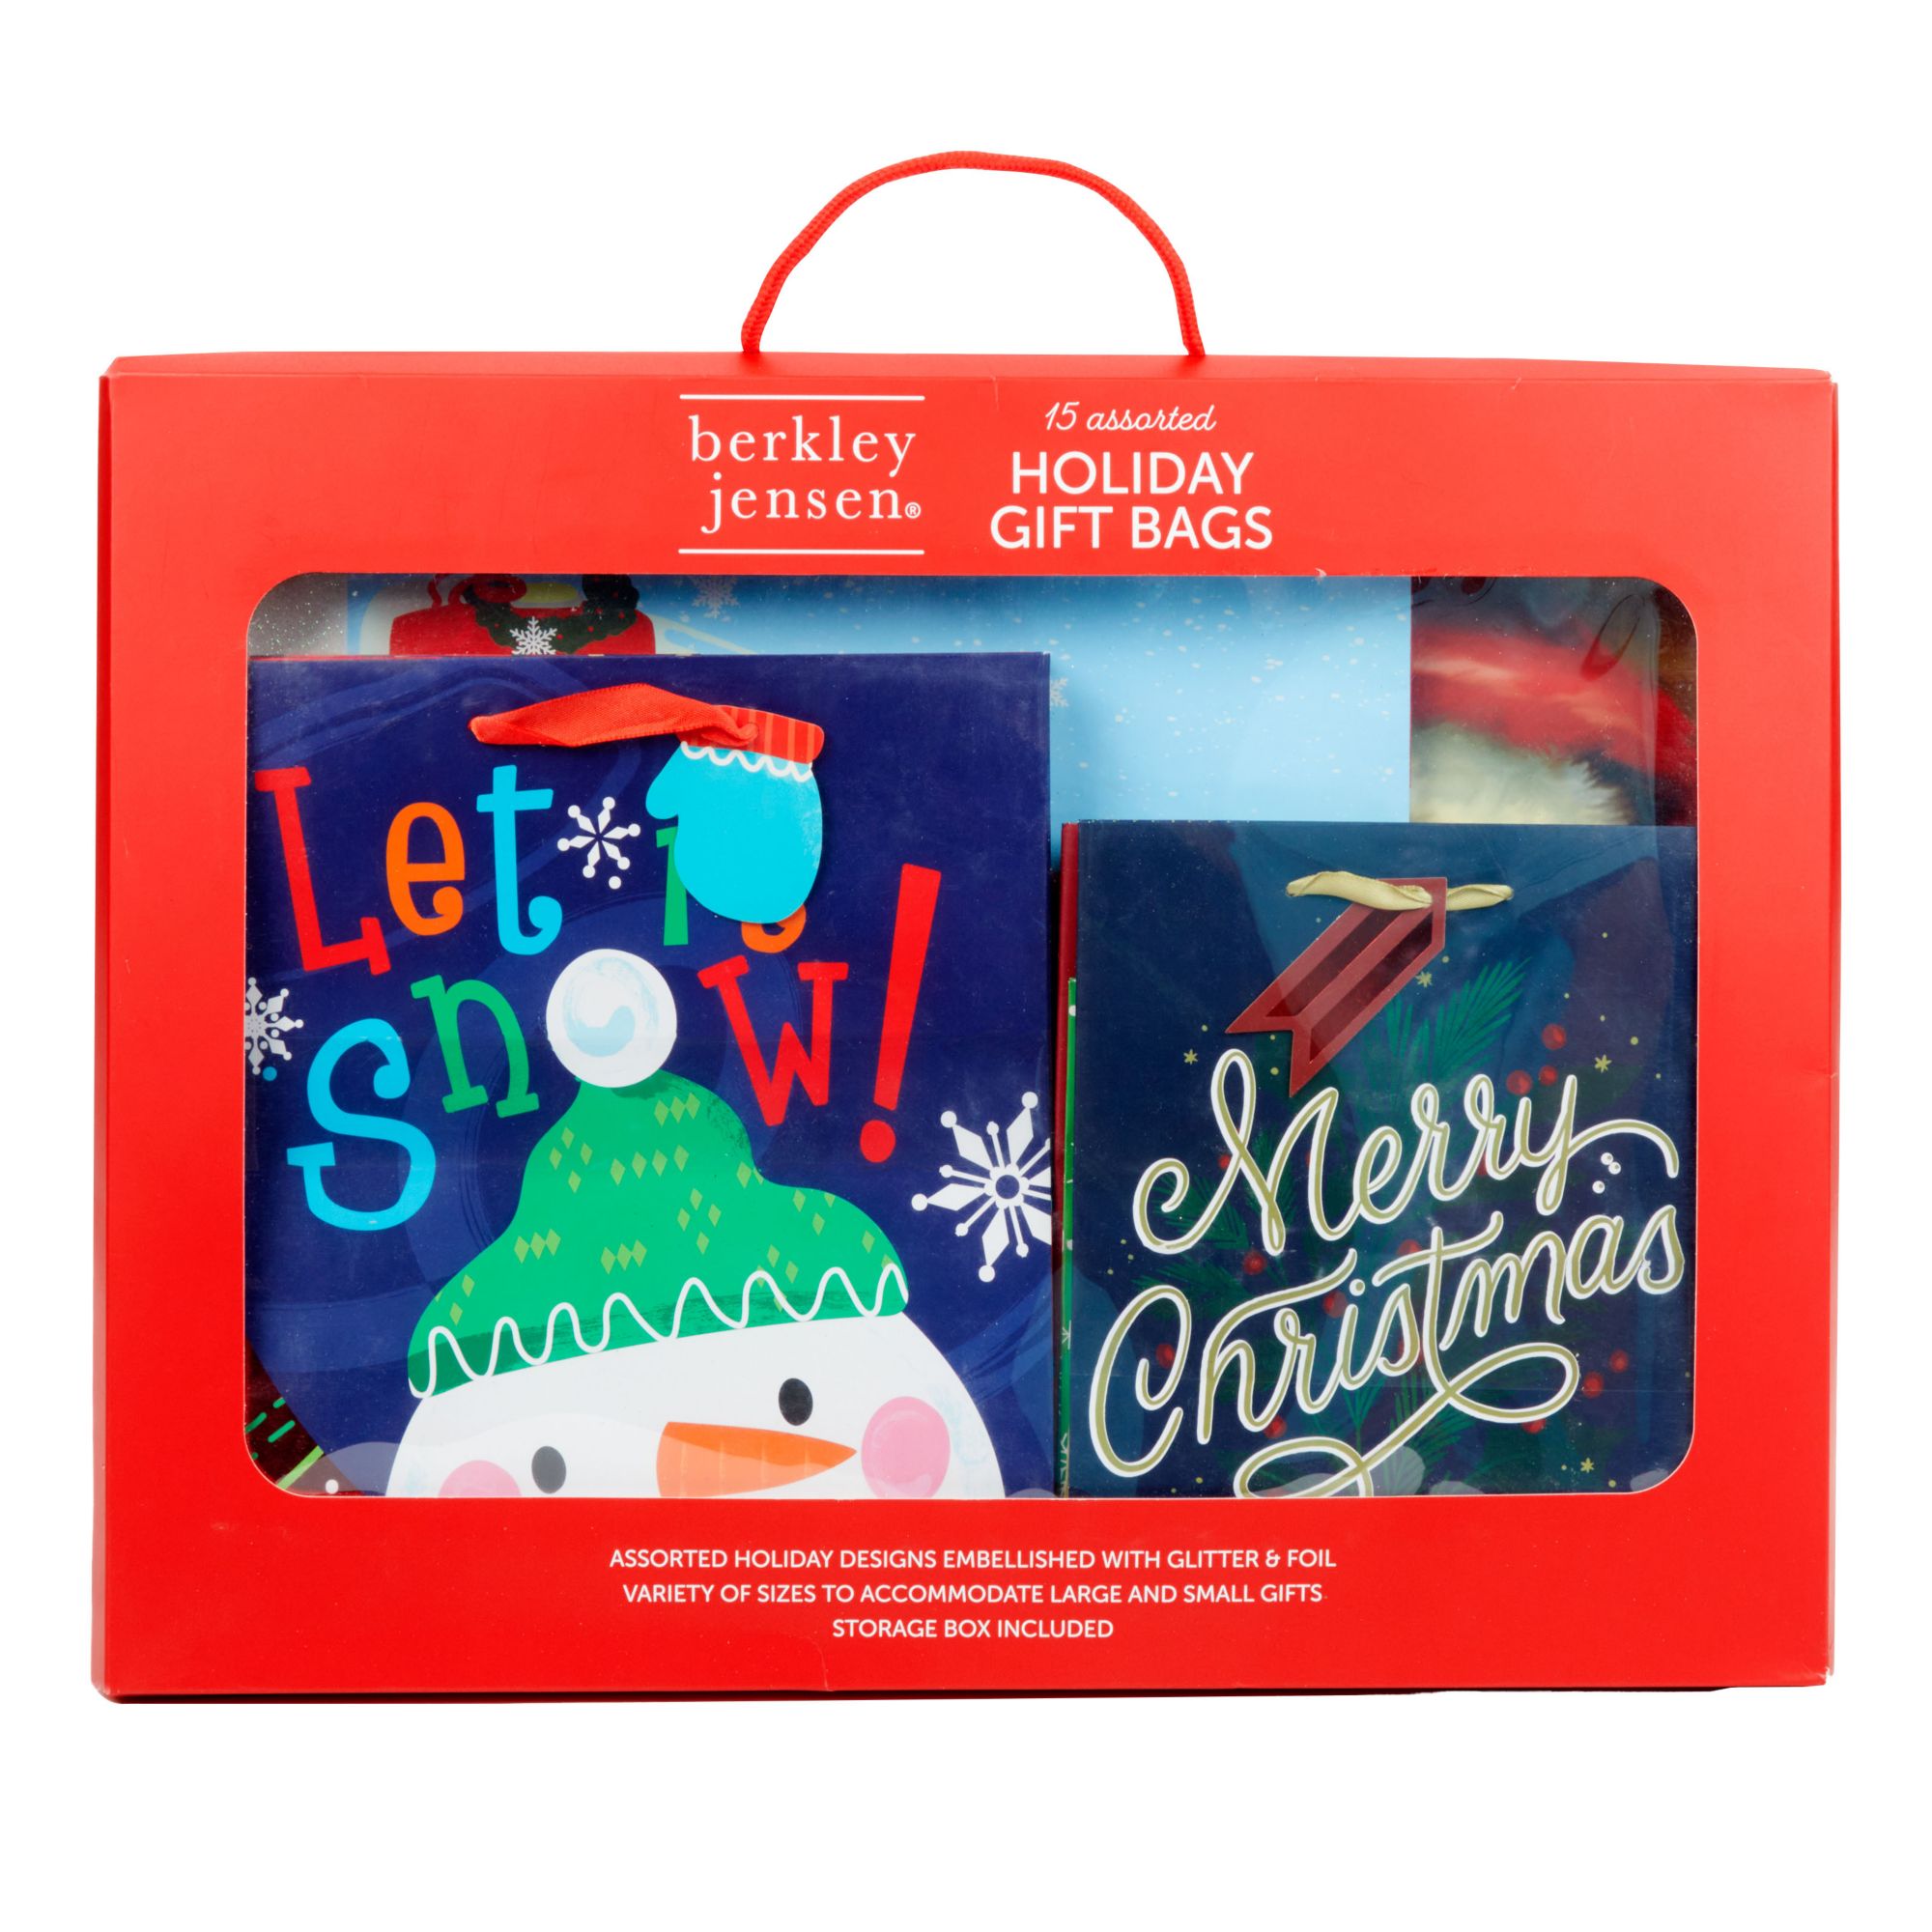 Holiday Tissue Paper Assortment Set (7 Colors) Classic Christmas Design,  150 Sheets - JOYIN